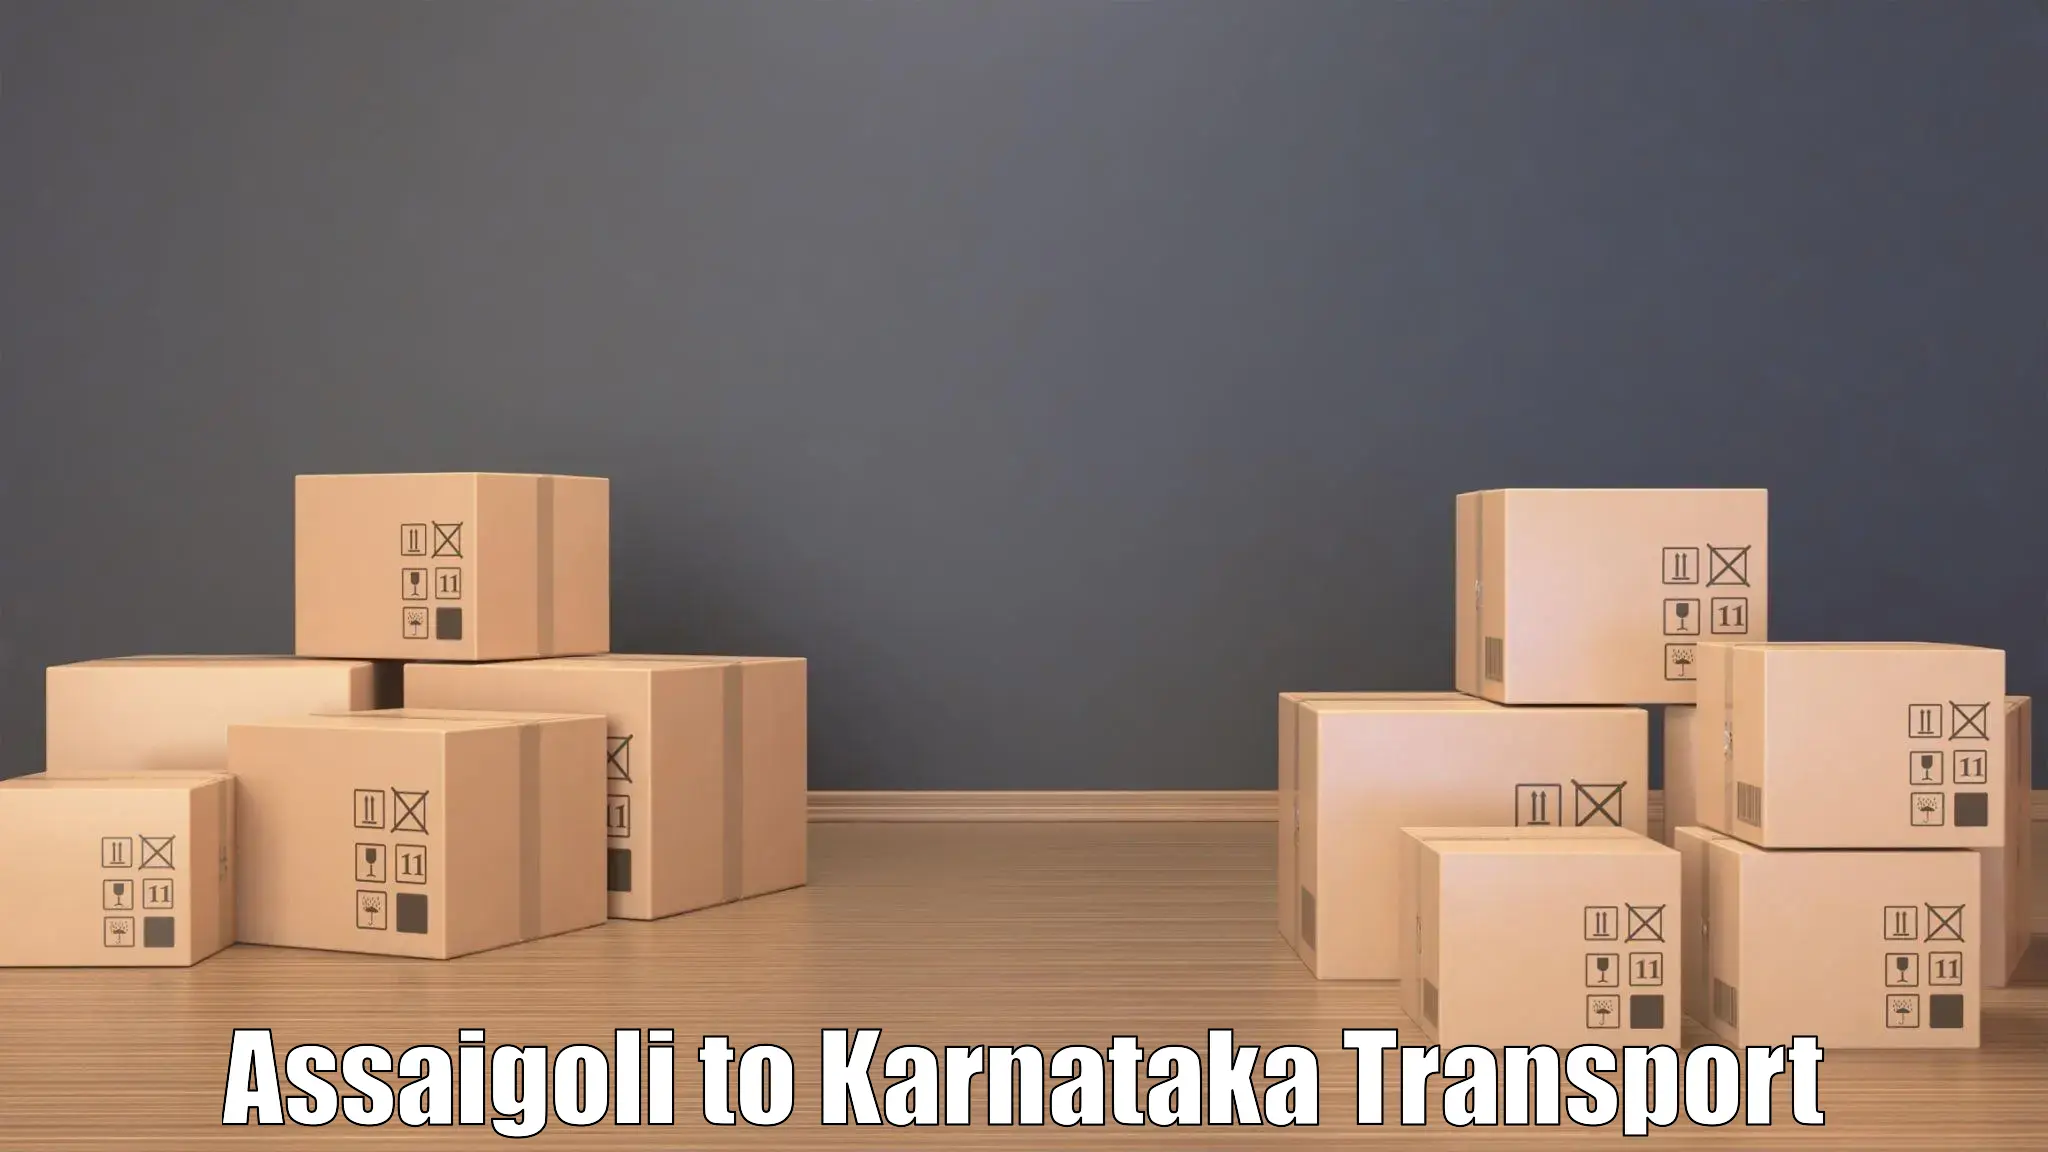 Transport bike from one state to another Assaigoli to Karnataka